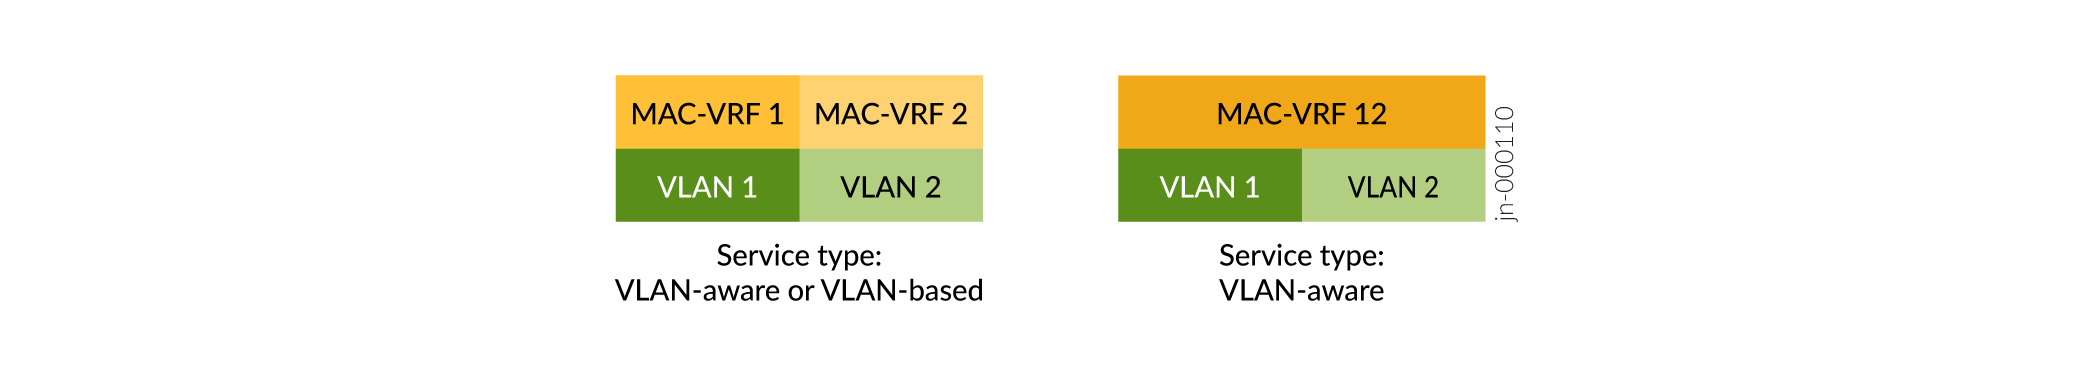 MAC-VRF Service Types